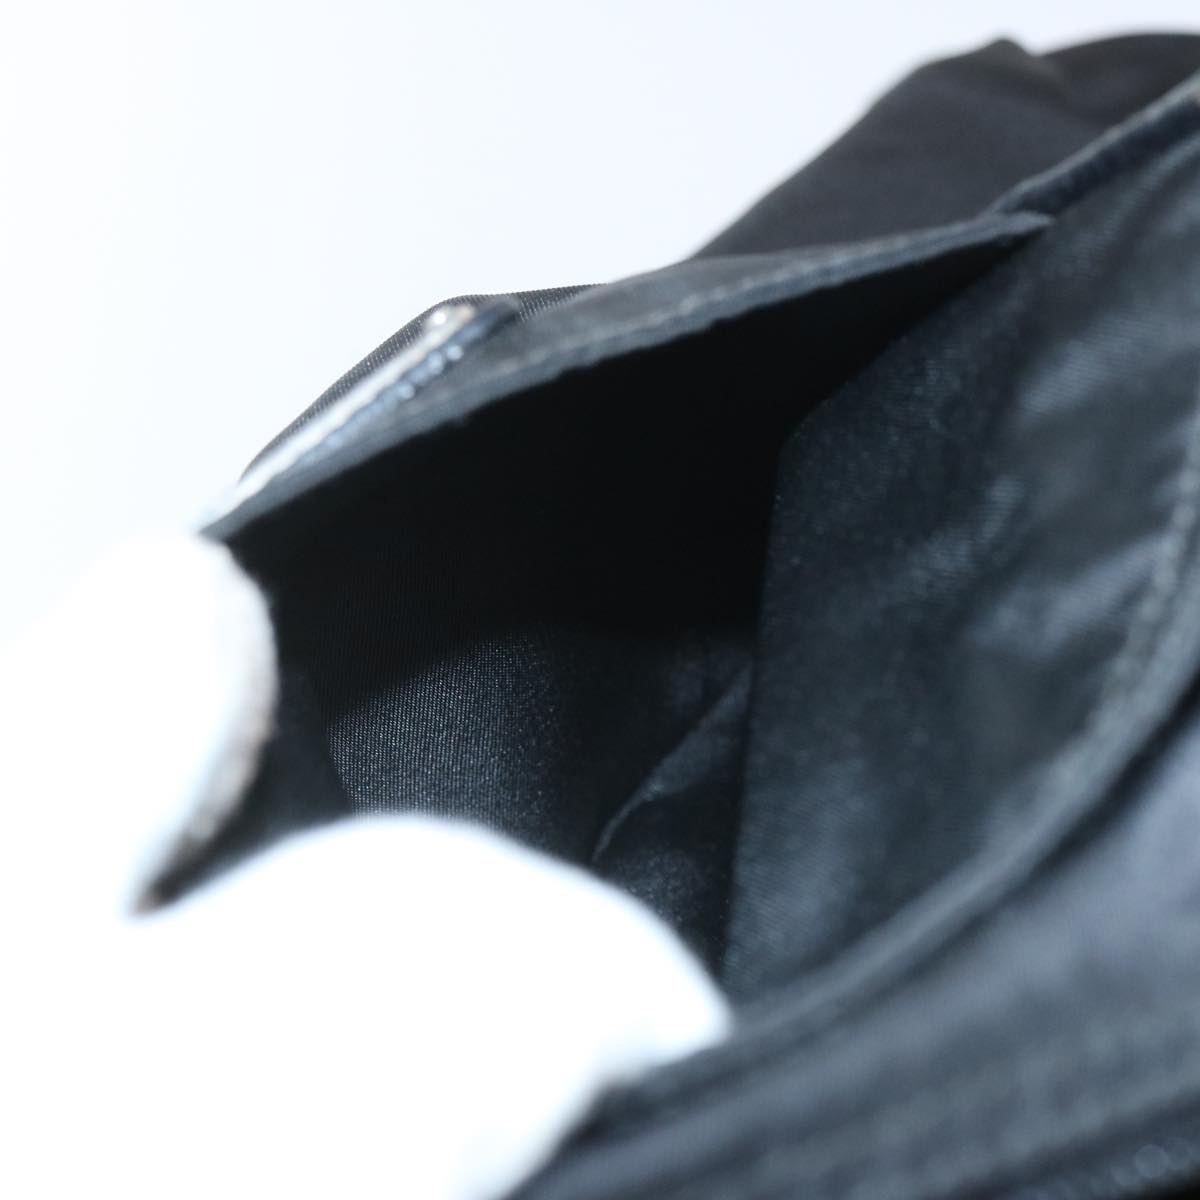 PRADA Tote Bag Nylon Black Auth 65377